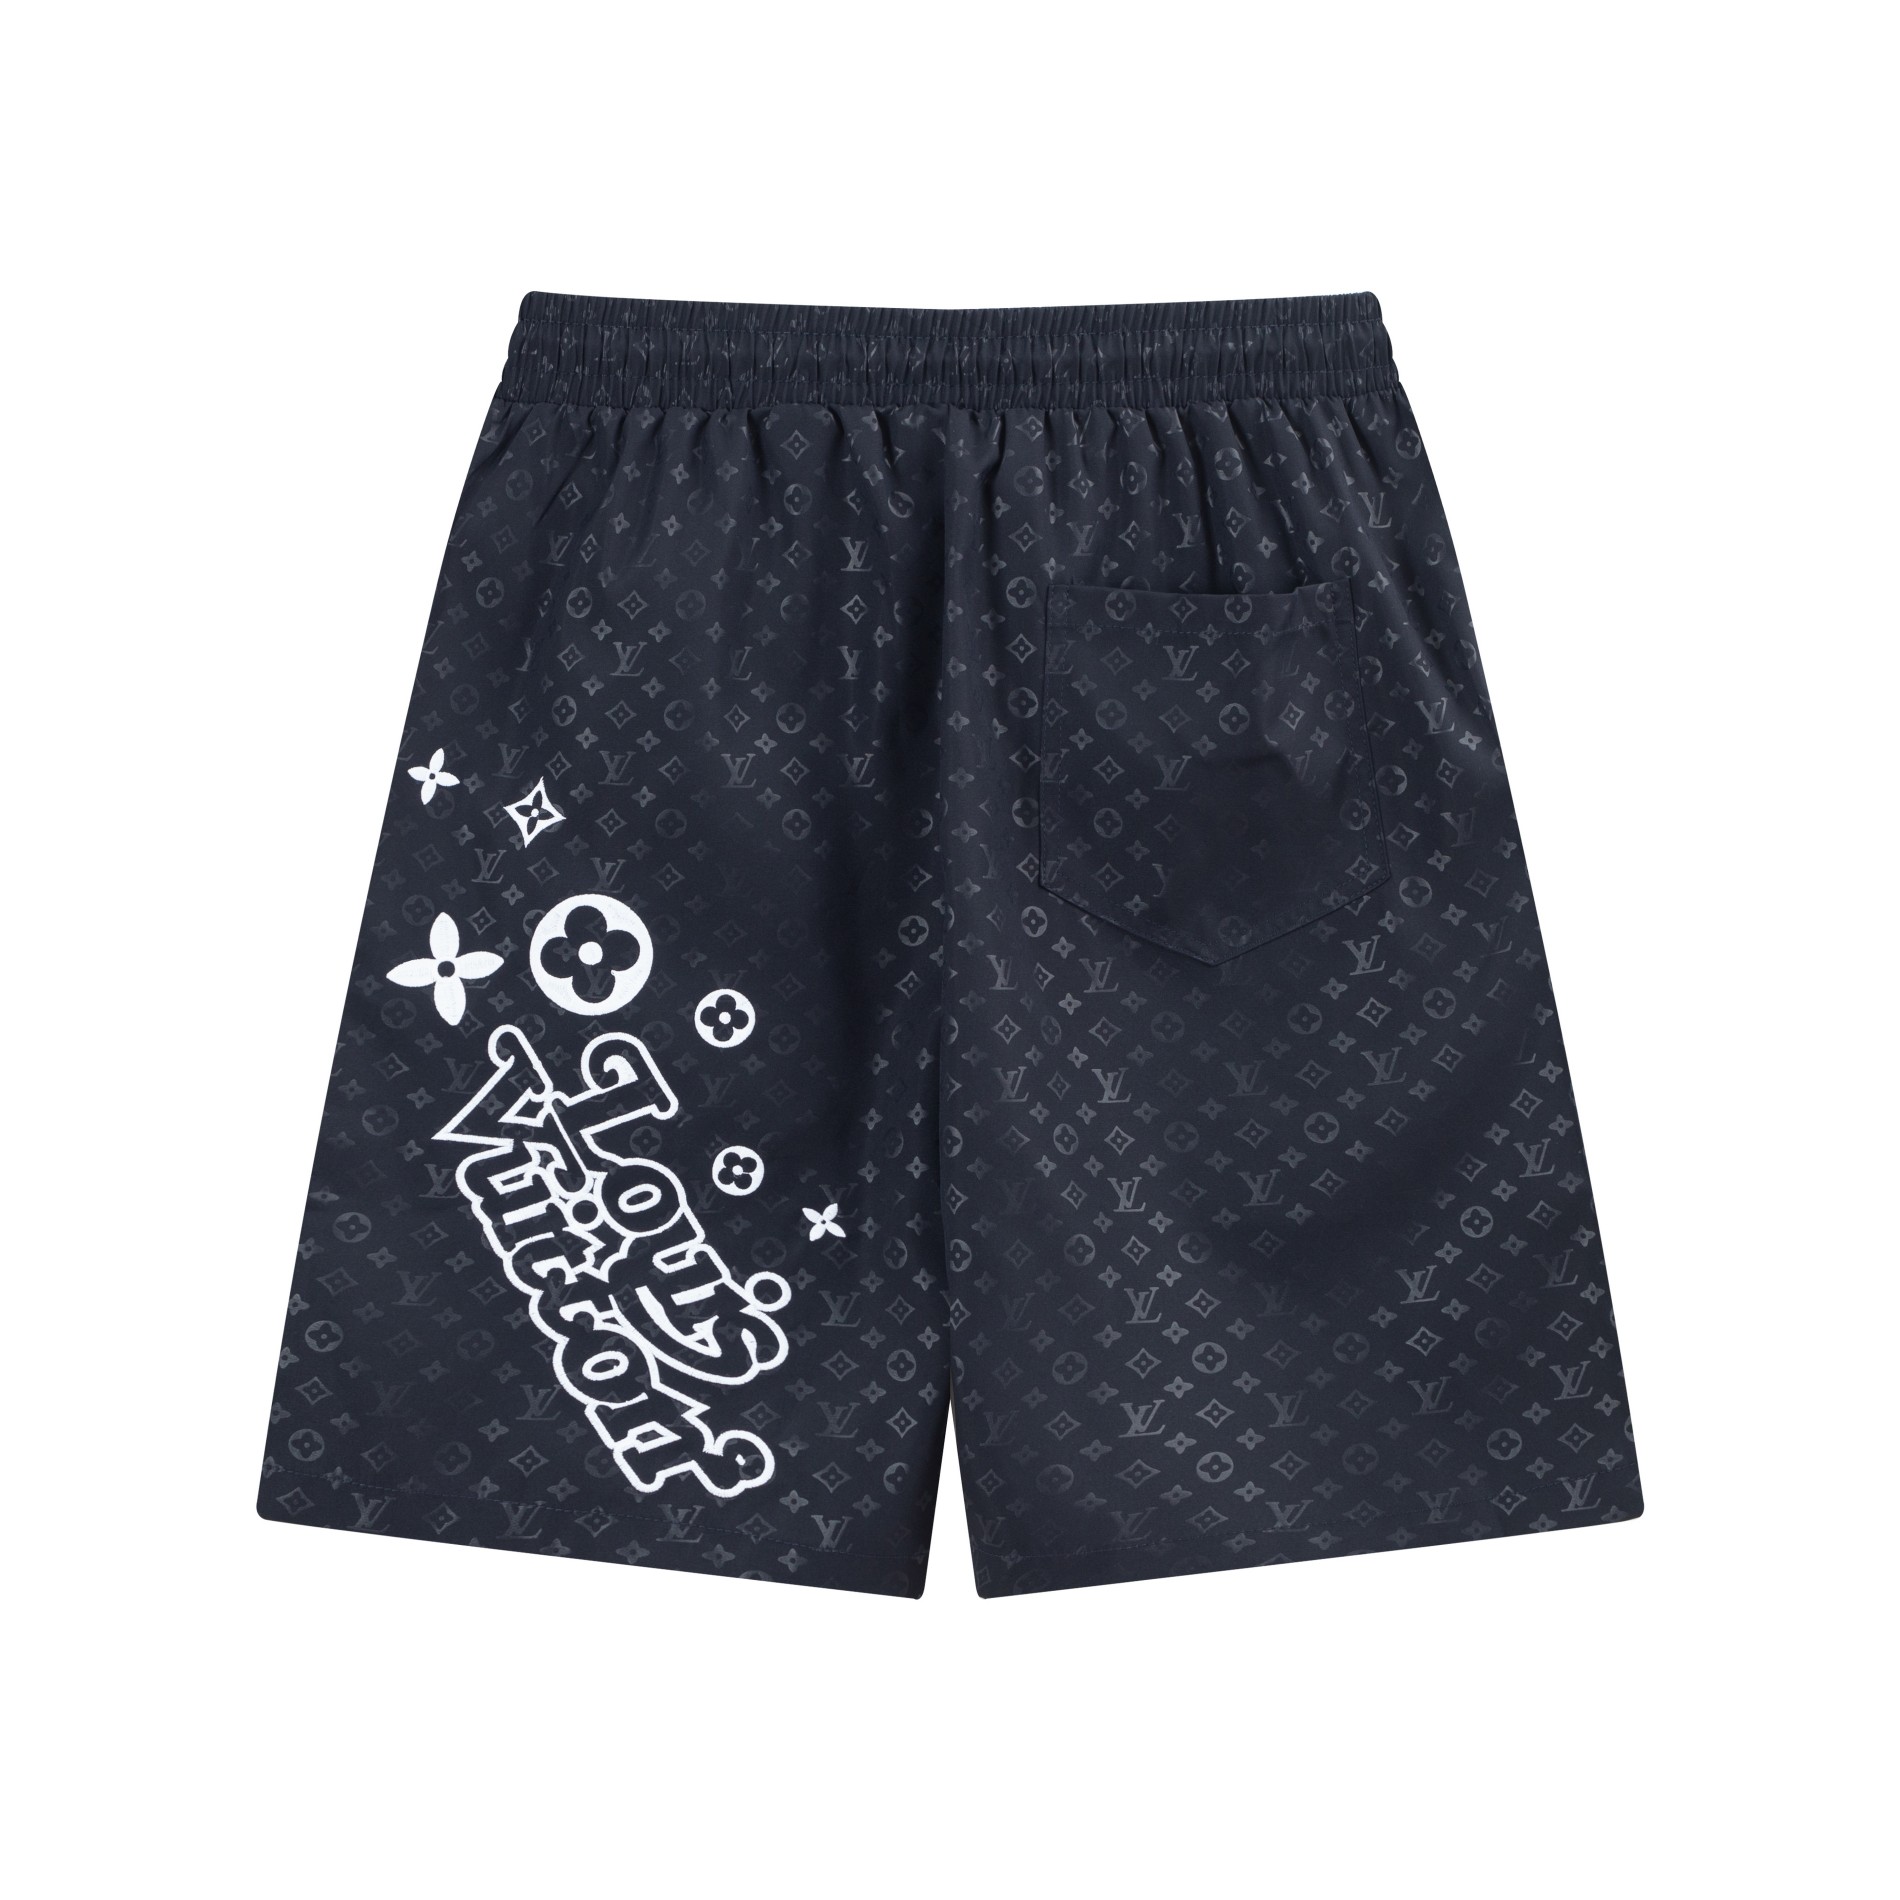 SSLV新款沙滩短裤颜色黑色宝蓝色尺寸M一4XL